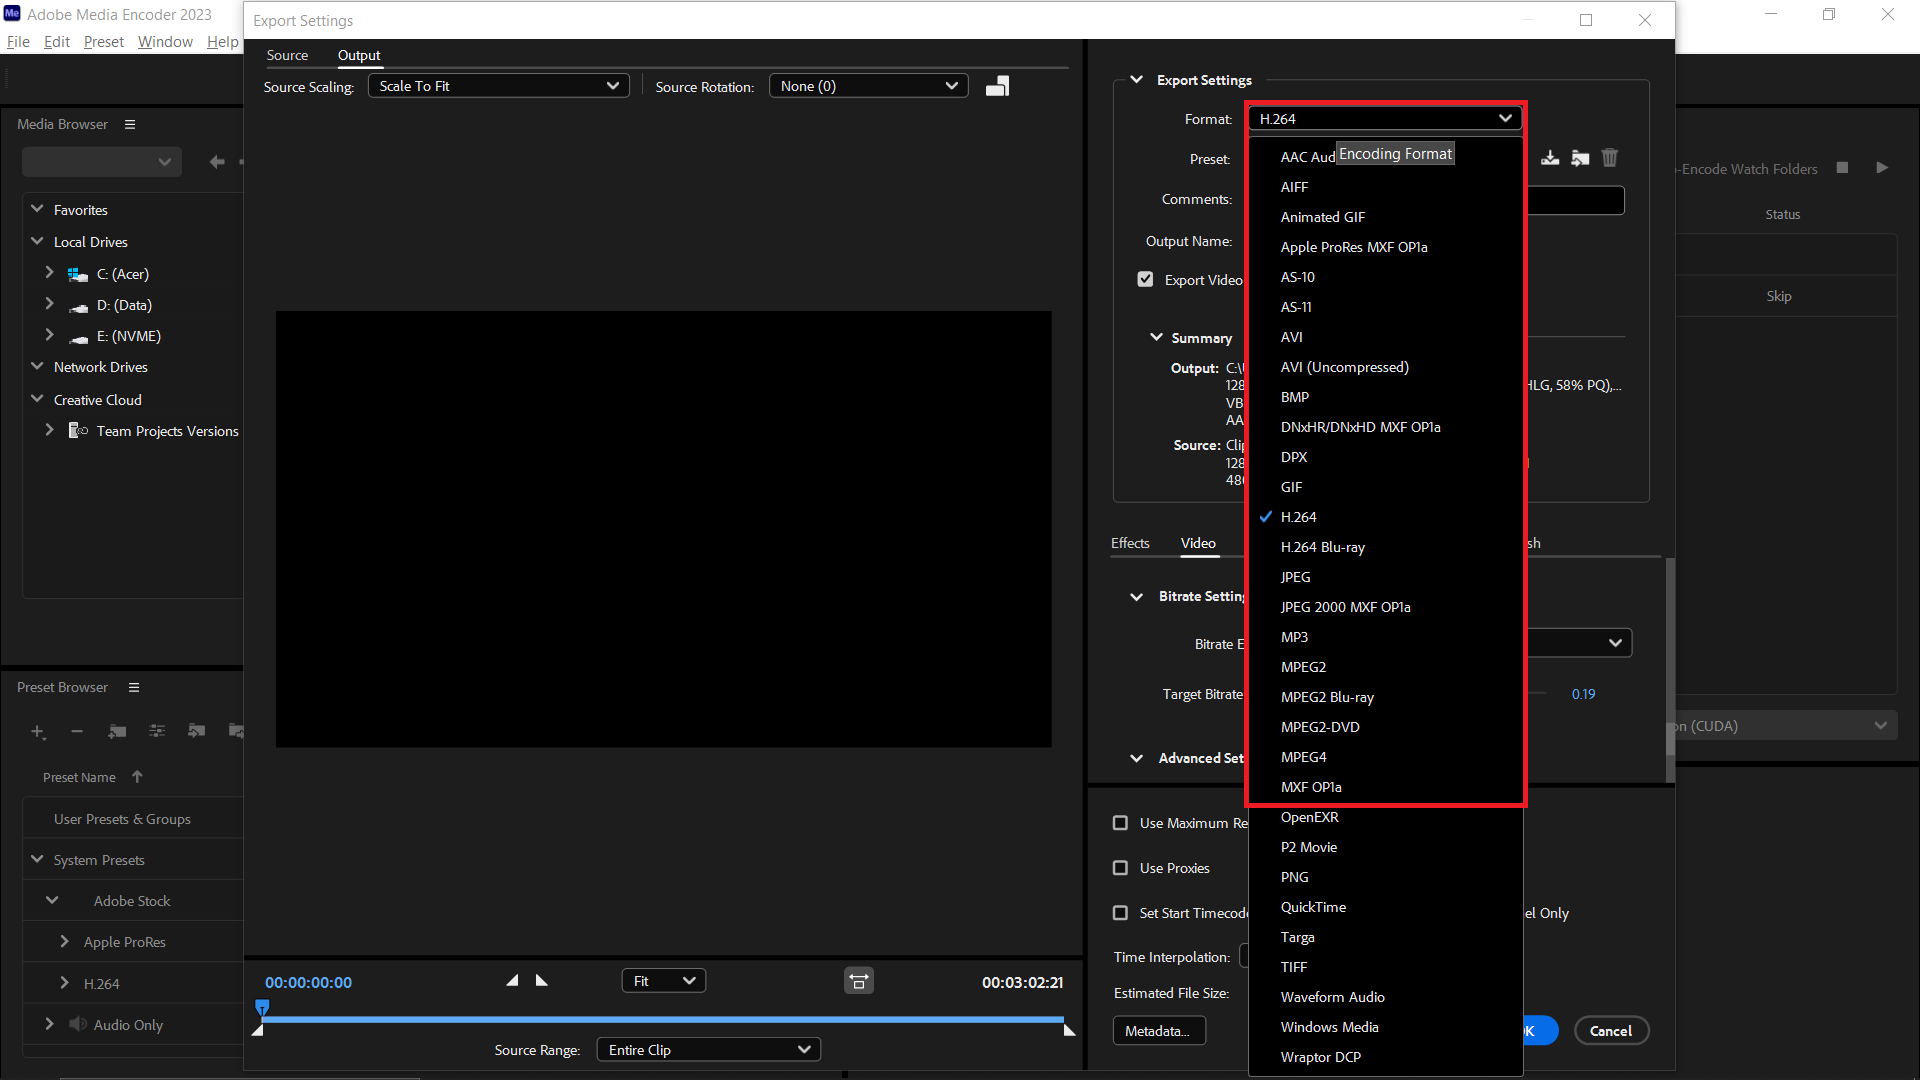 How To Use Adobe Media Encoder on Windows: Step 3